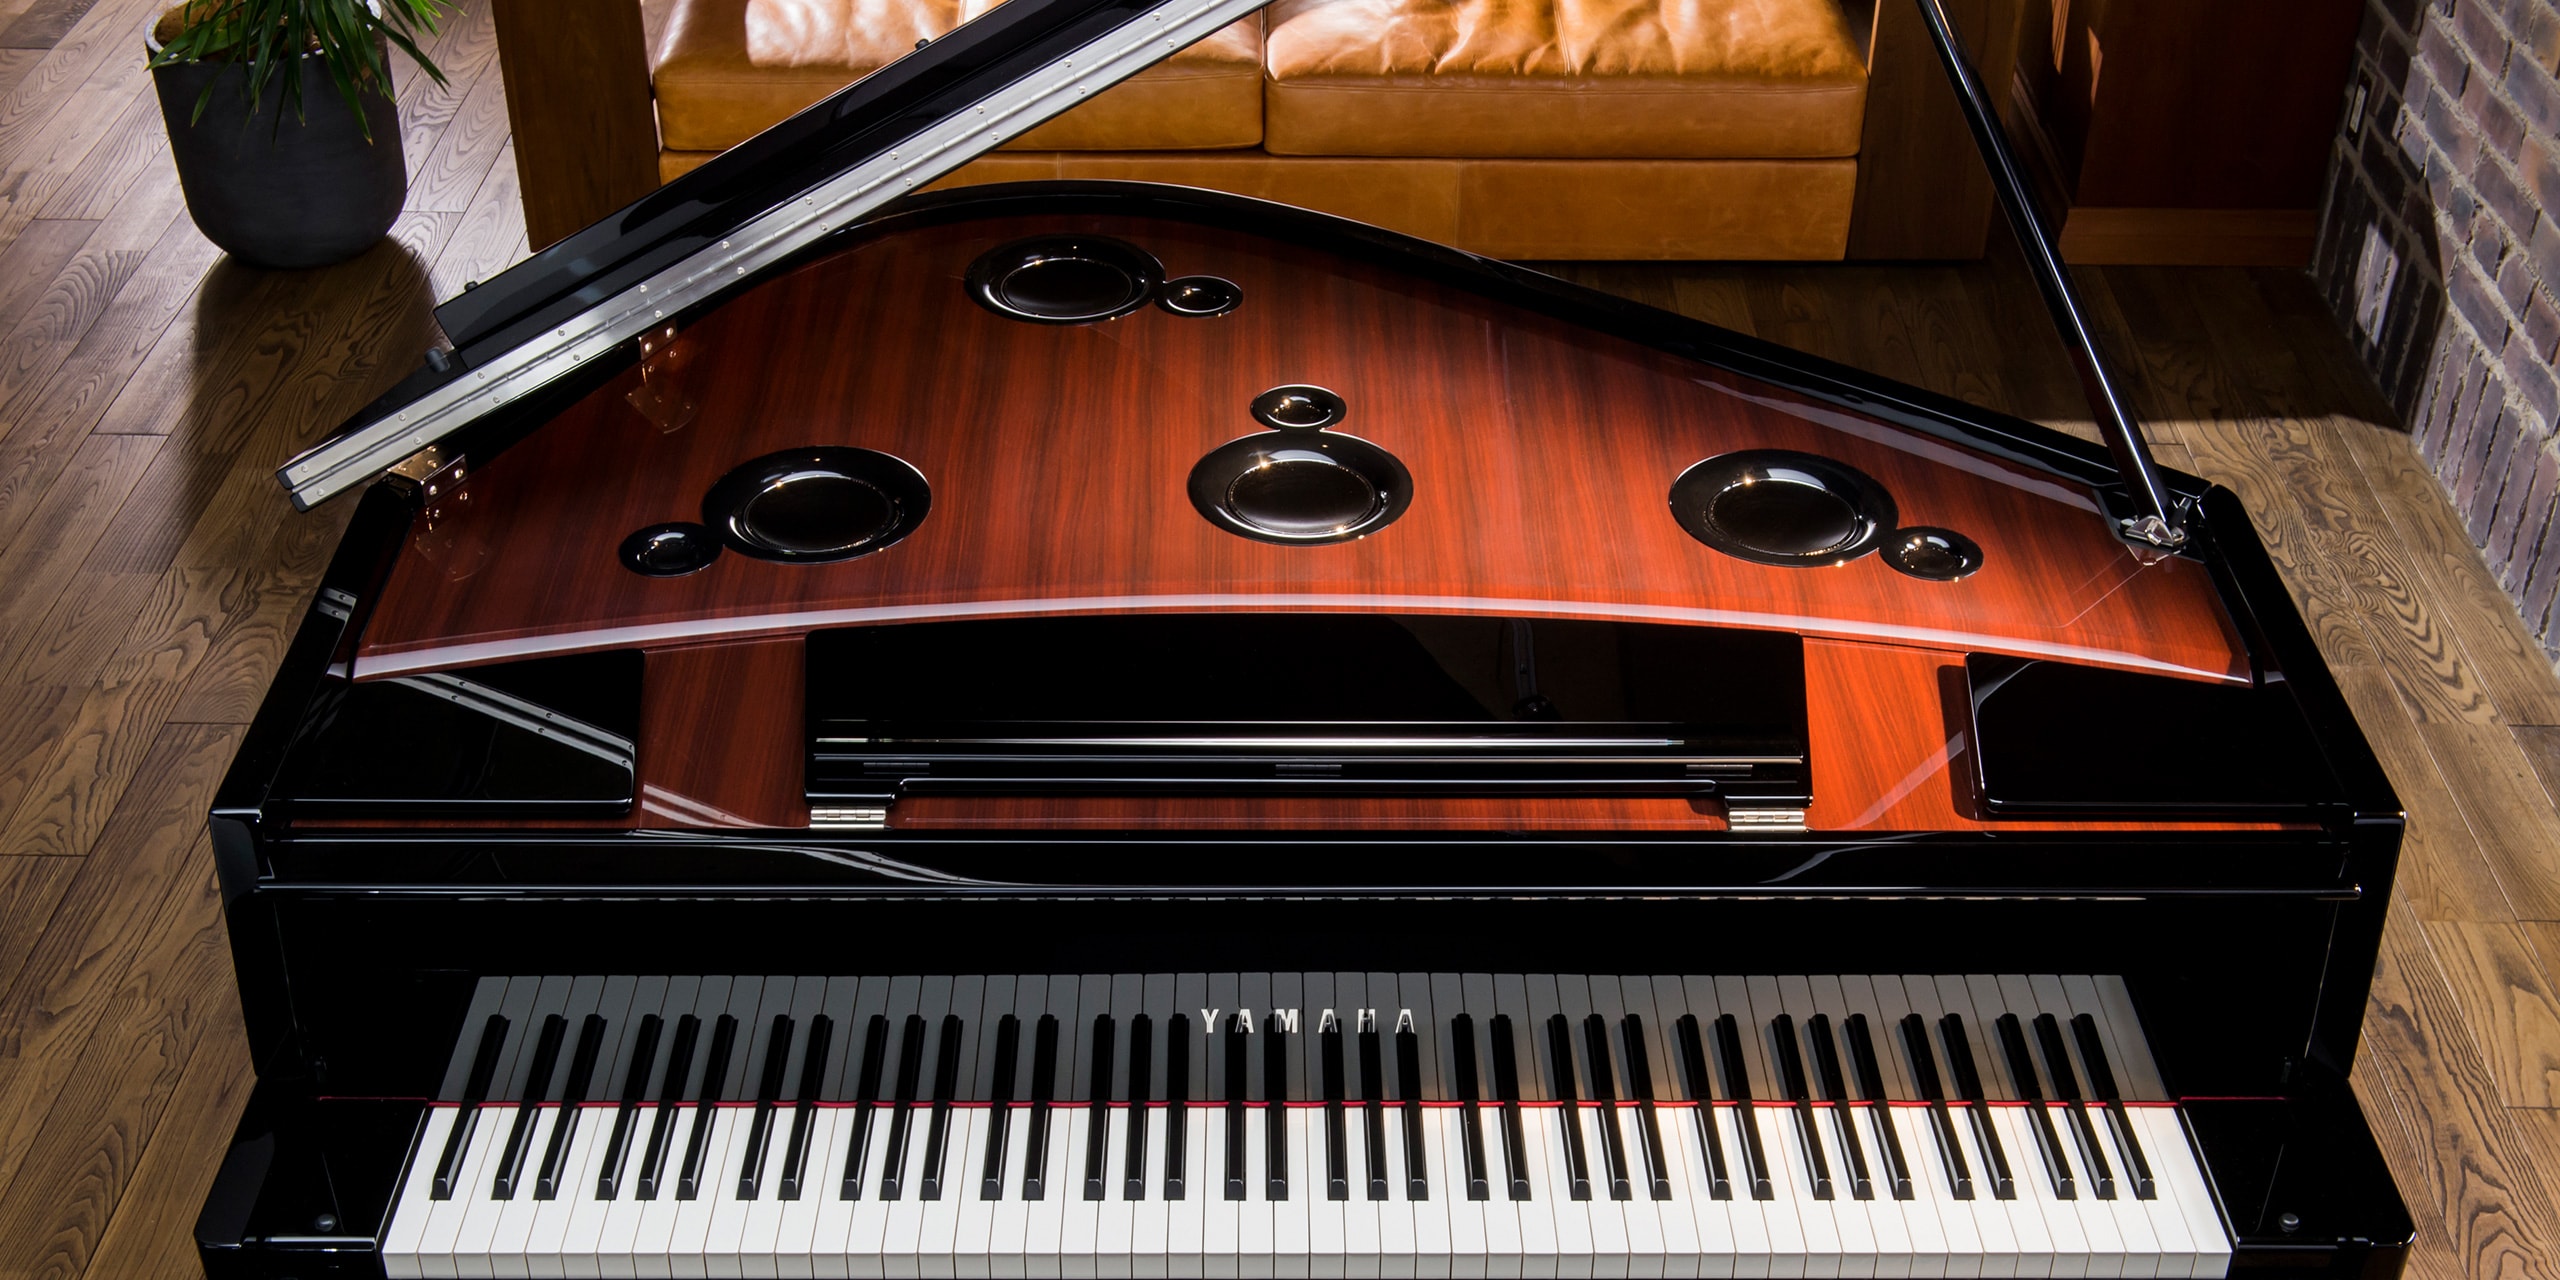 
Kawai vs. Yamaha Piano: Which Brand Reigns Supreme For Your Music Needs?